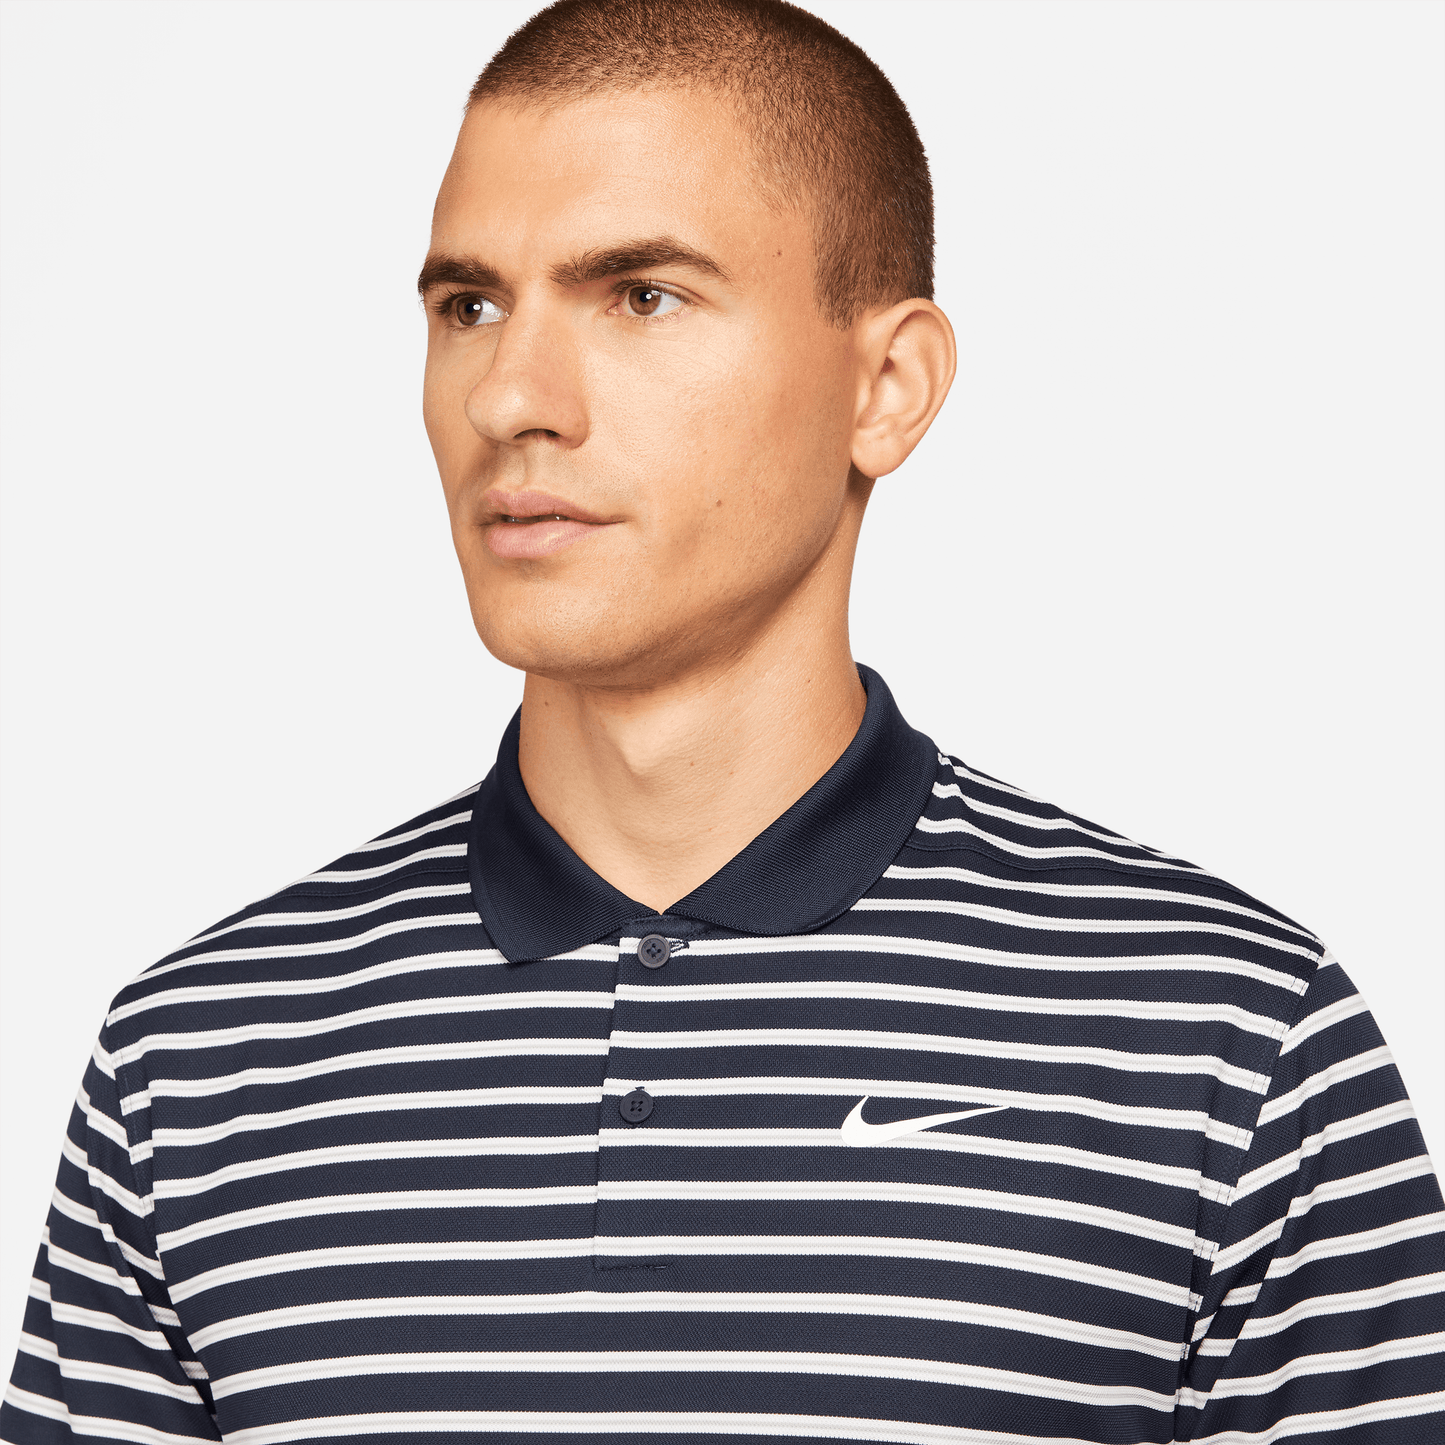 Nike Golf Dri Fit Victory Stripe Golf Polo Shirt DH0829   